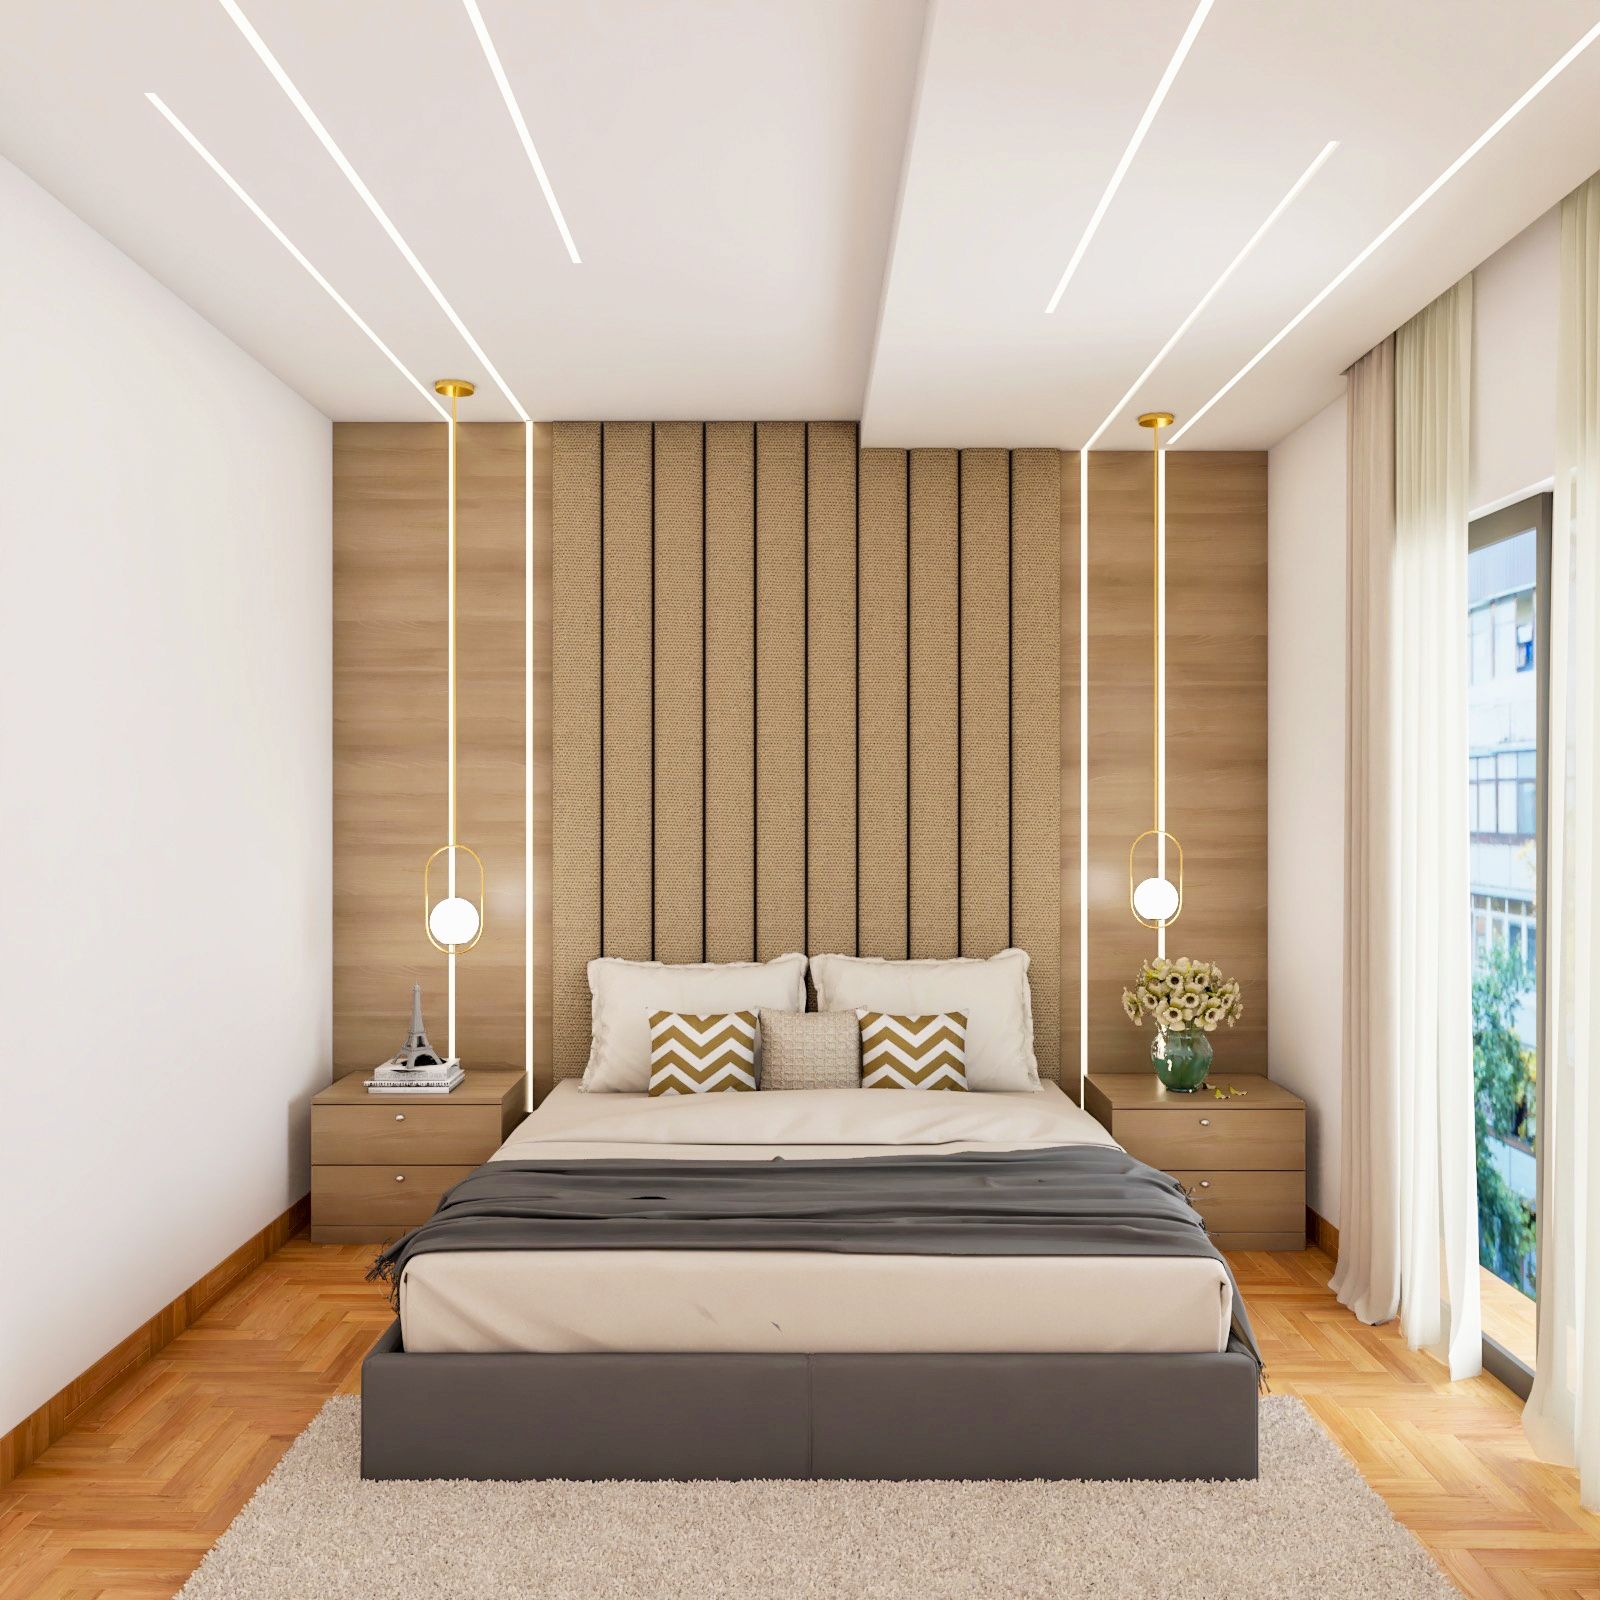 Modern Multilayered Gypsum Bedroom False Ceiling Design With White Stripes